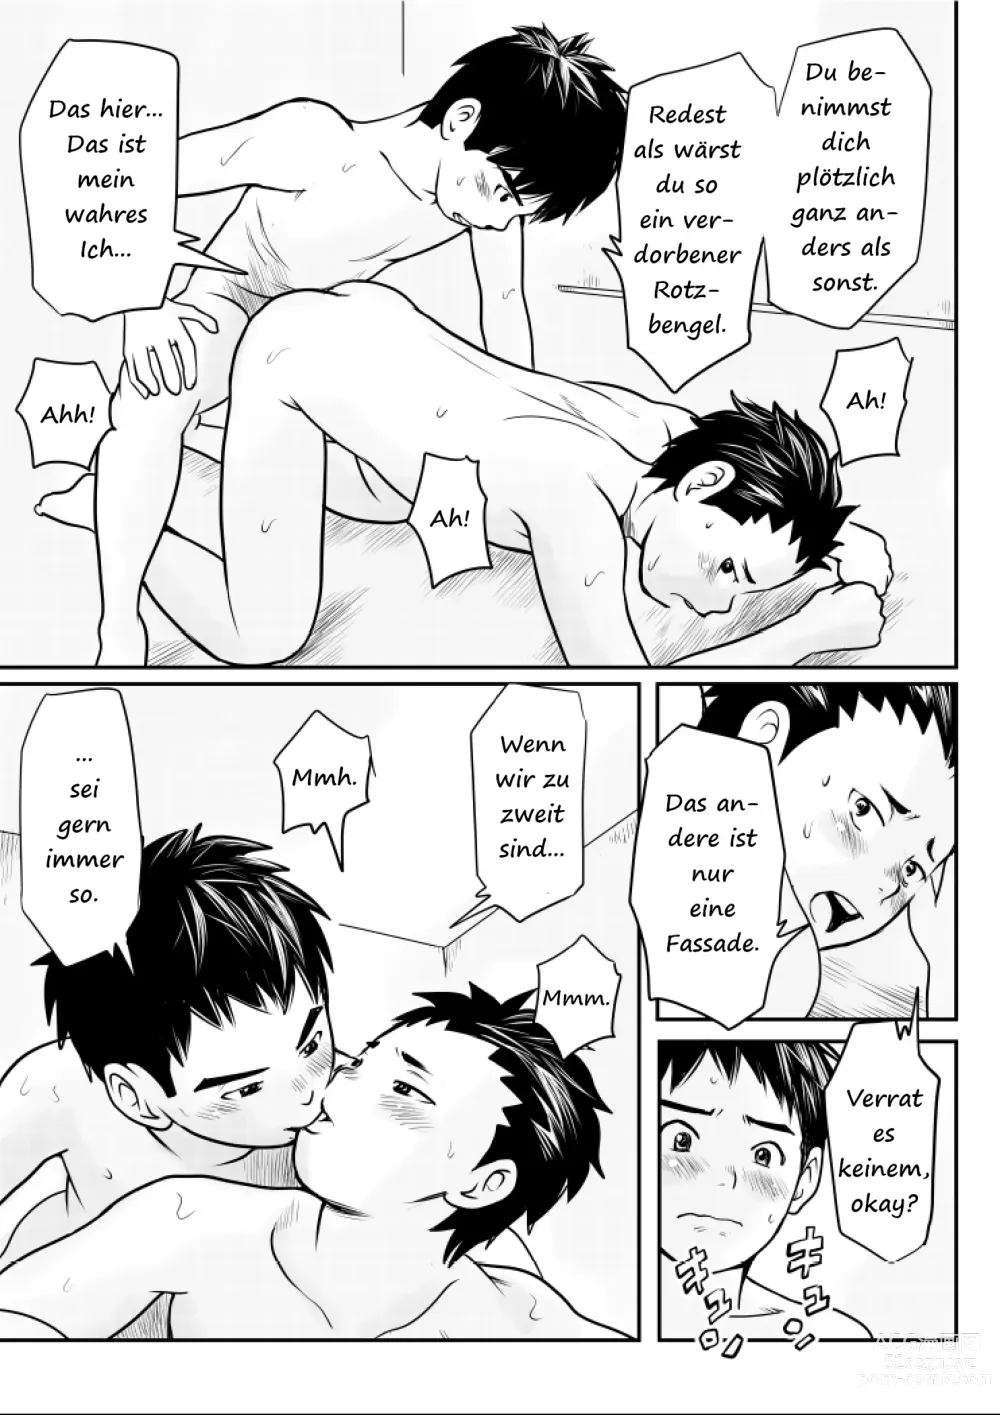 Page 43 of doujinshi Pubertätsjahre - Spätphase